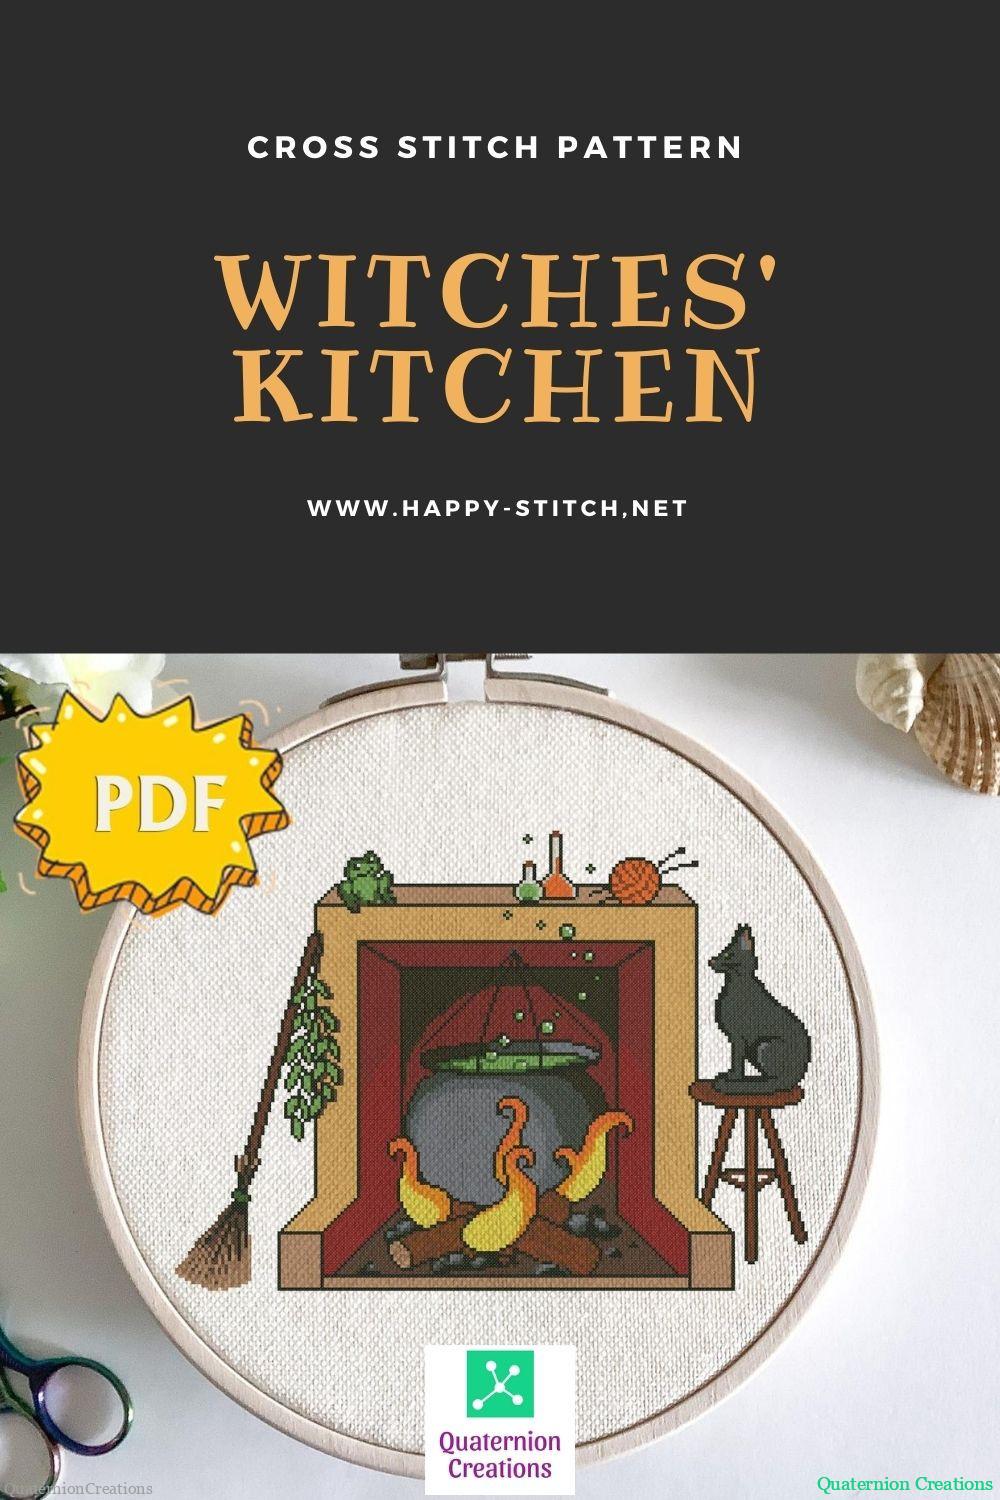 Witches' Kitchen cross stitch pattern